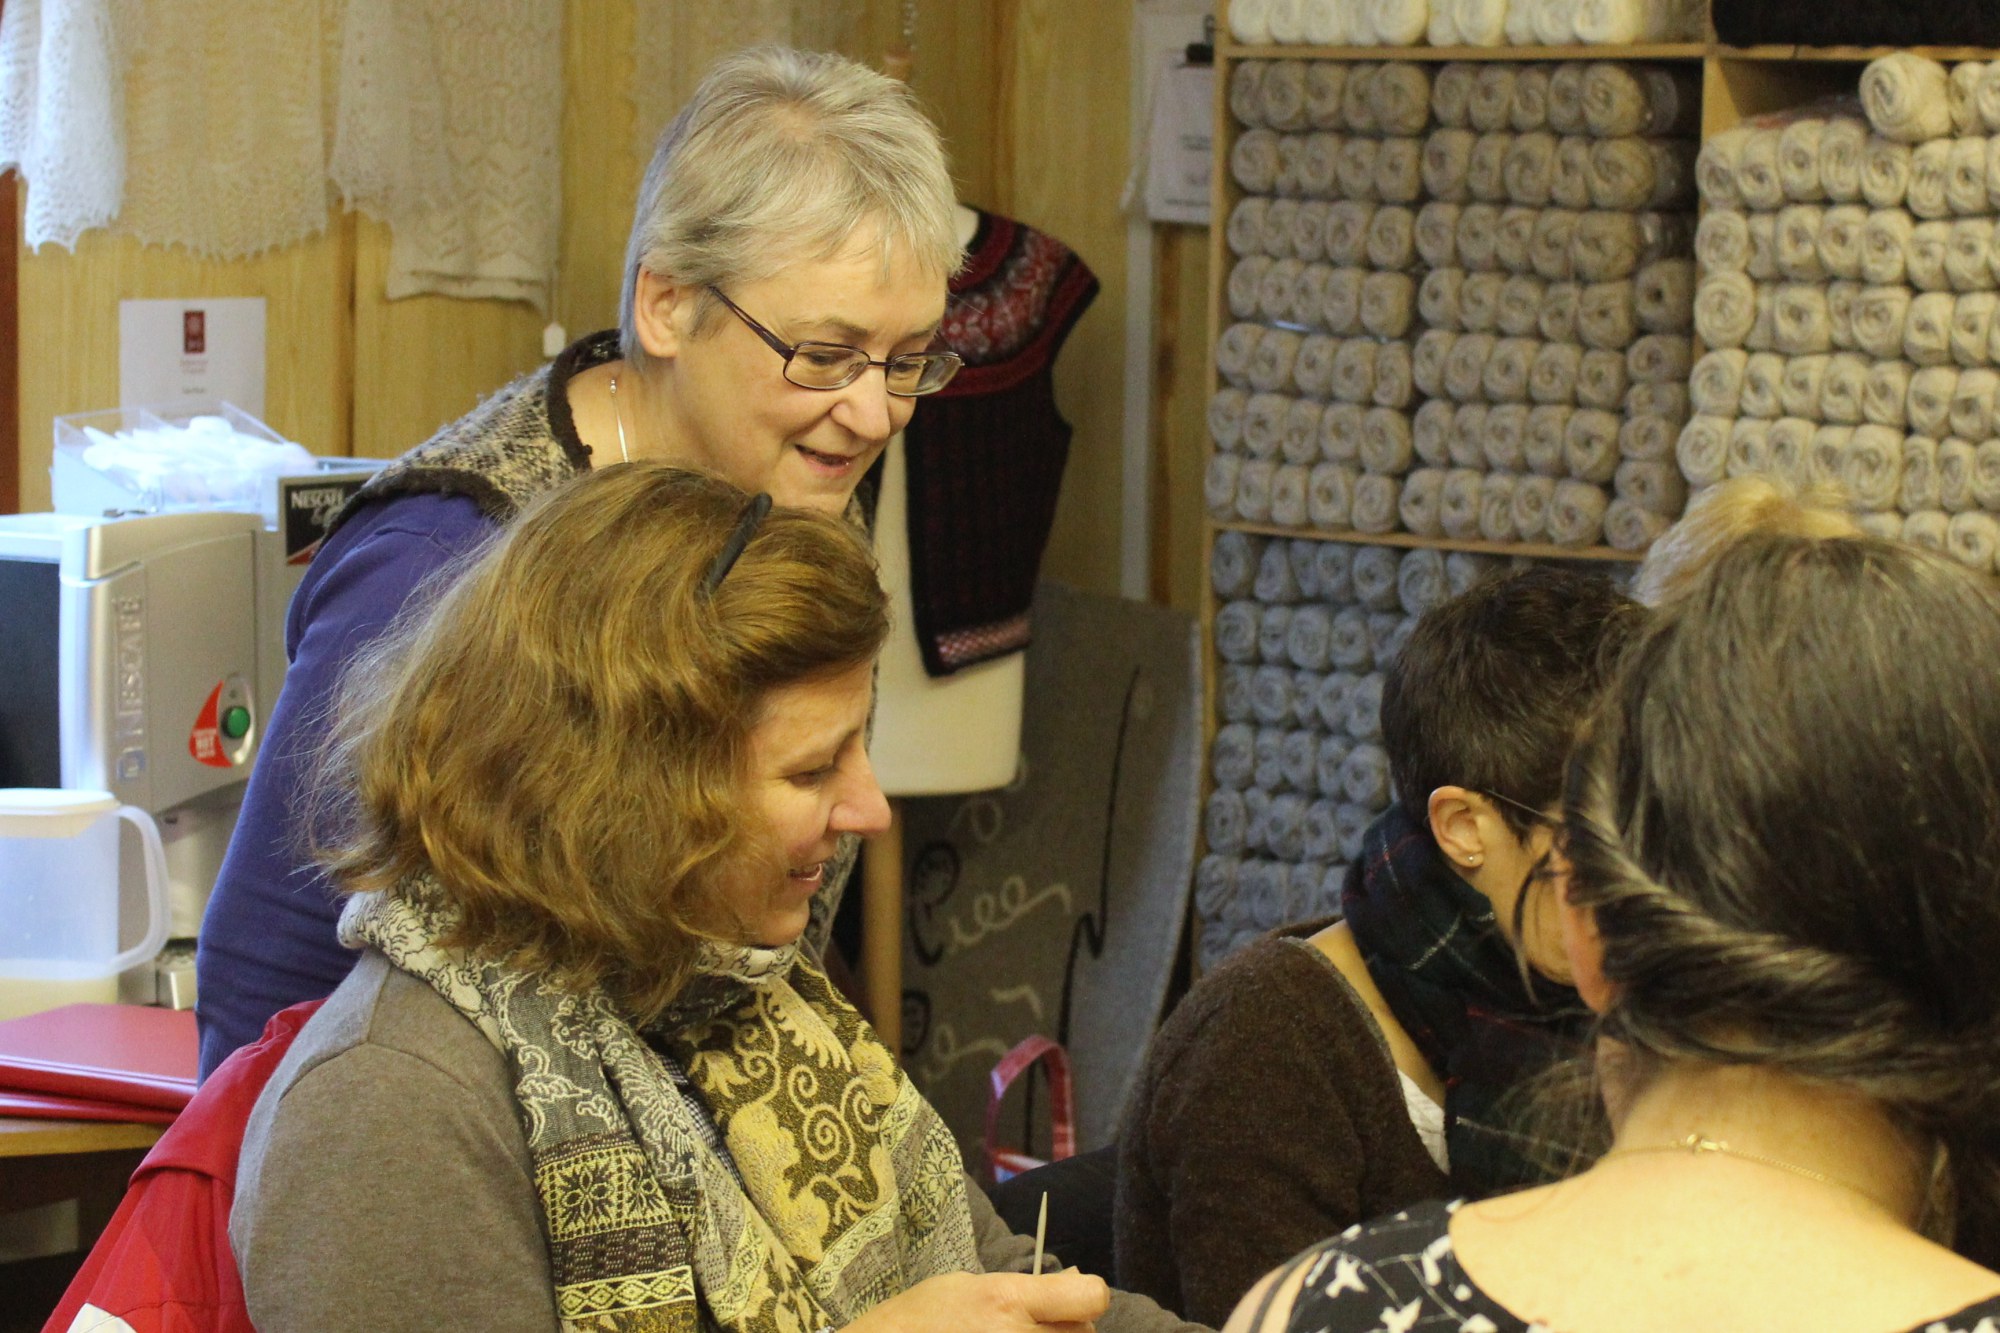 Fair Isle knitting with Hazel Tindall - photo © Ella Gordon and used with kind permission